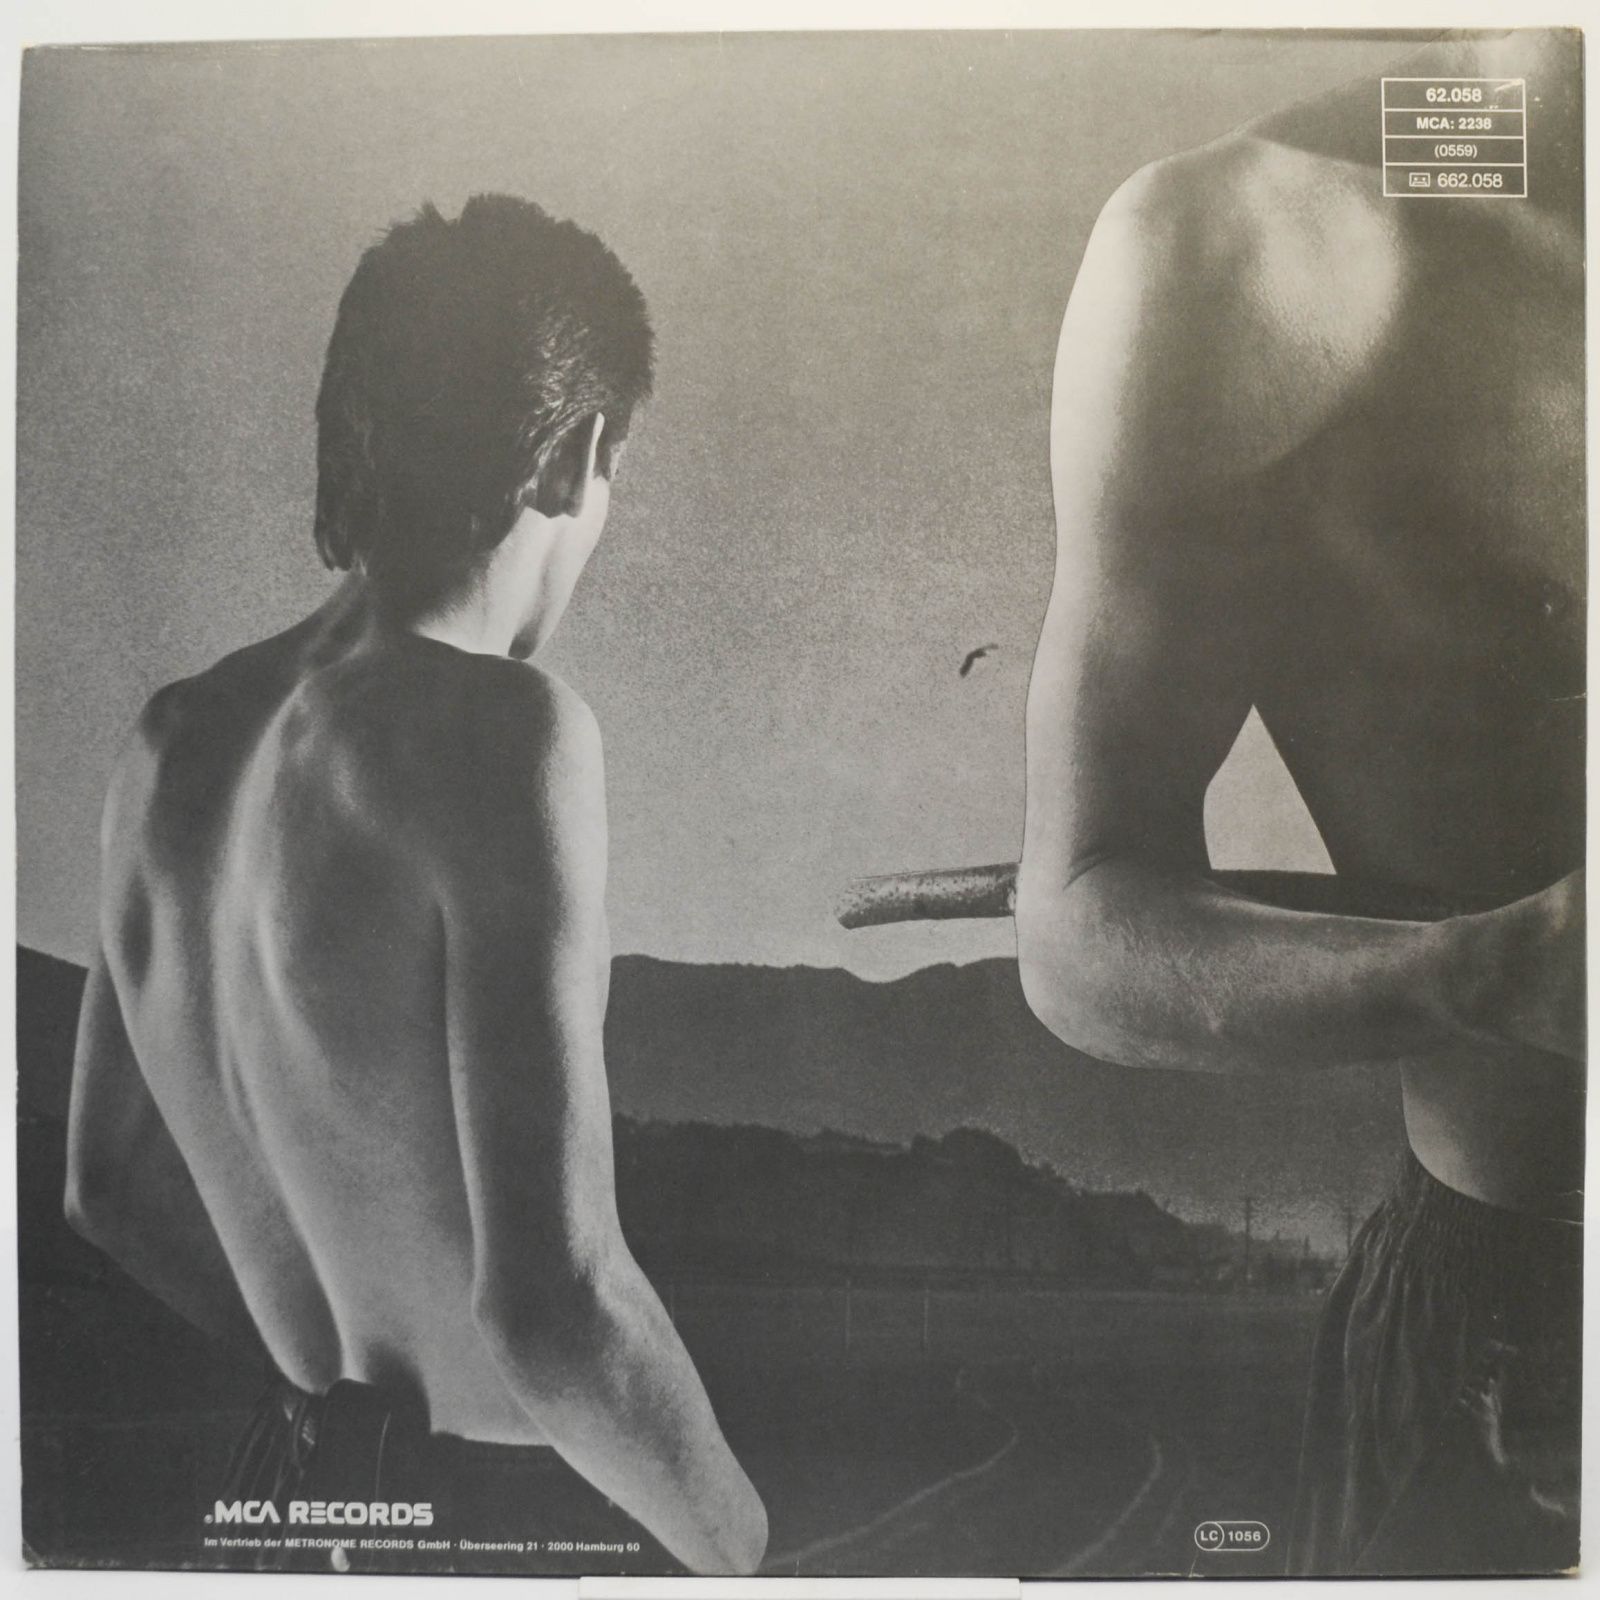 Wishbone Ash — New England, 1976